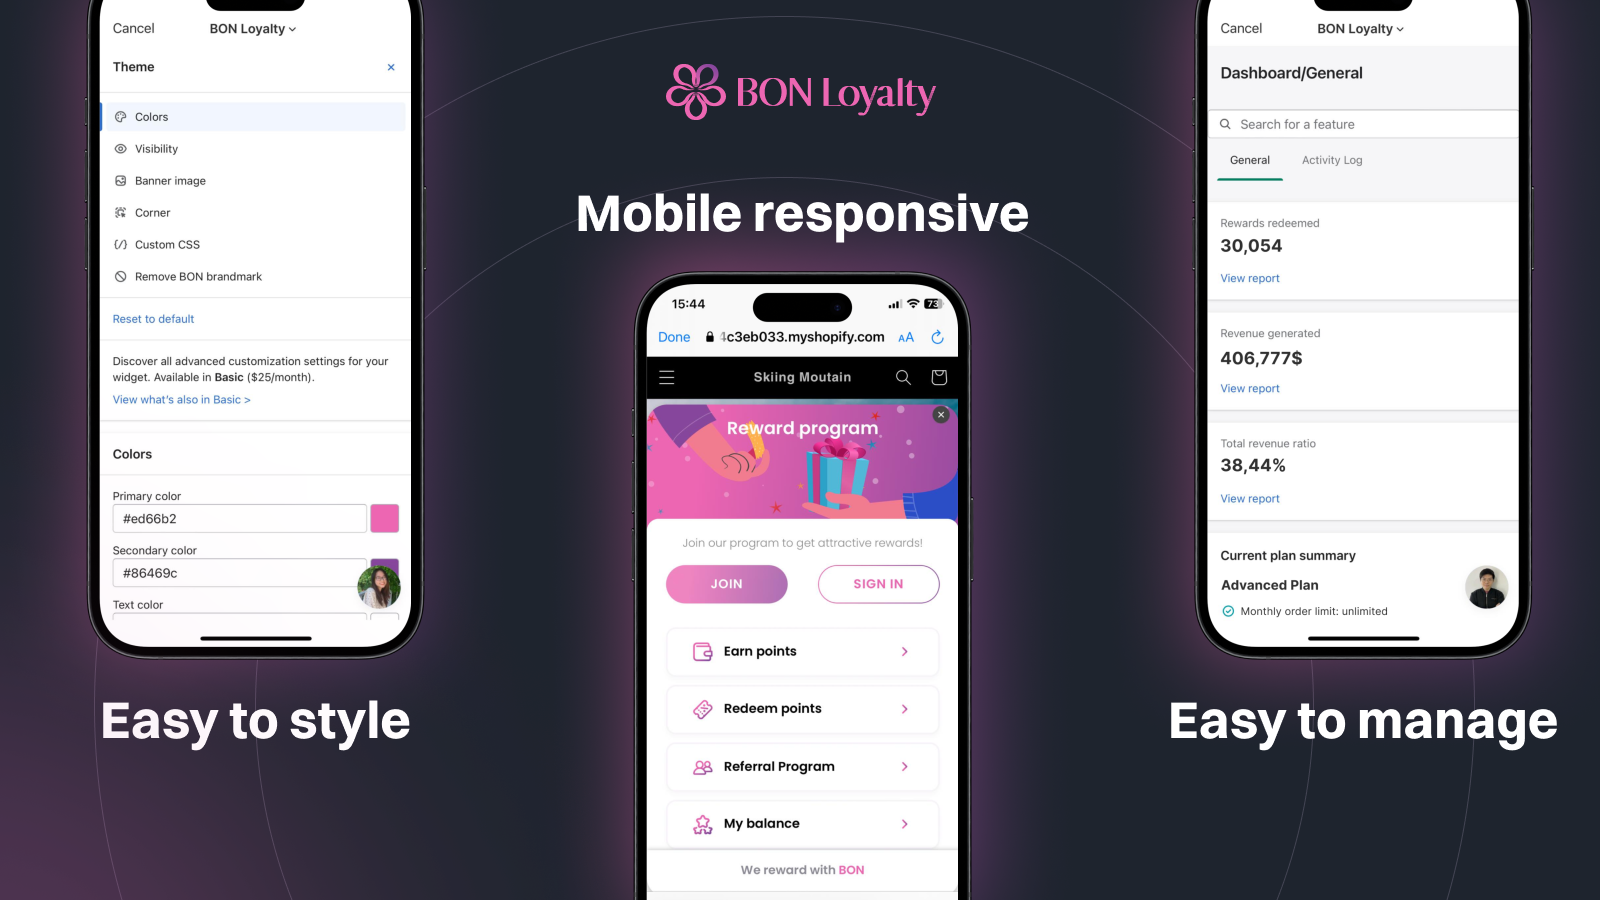 BON Loyalty provide mobile-responsive user interface